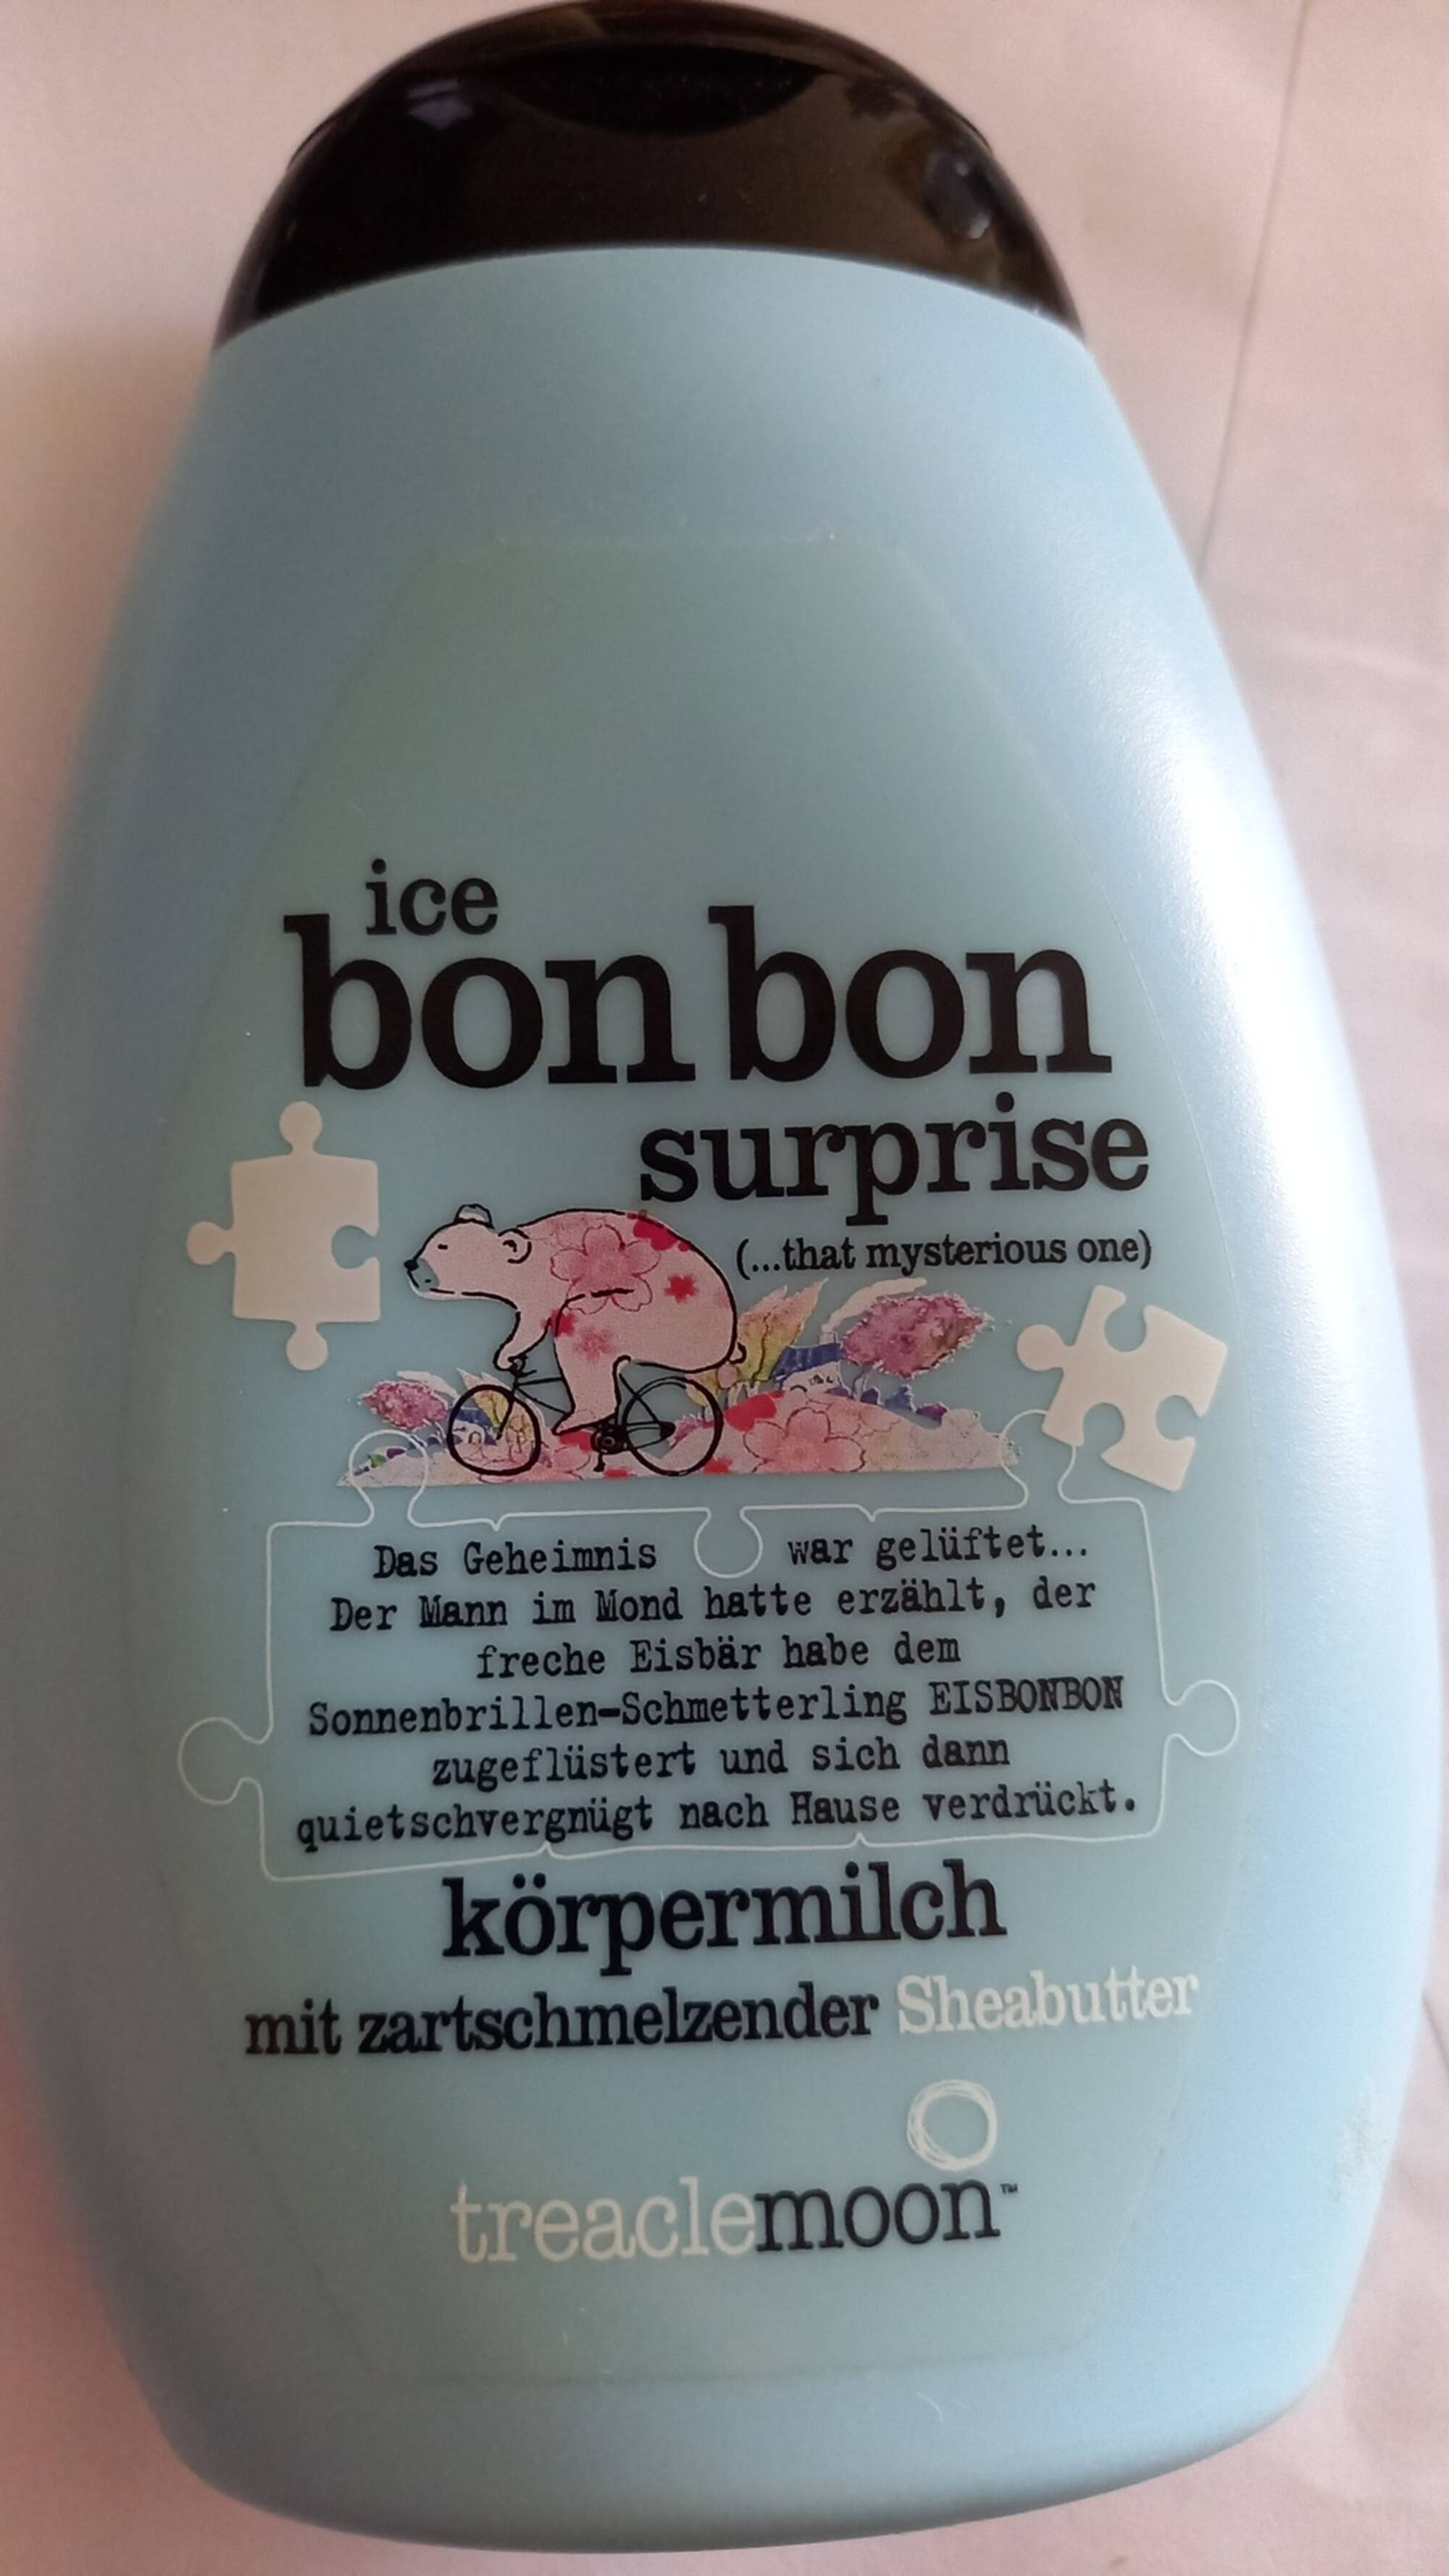 TREACLE MOON - Ice bonbon surprise - Körpermilch